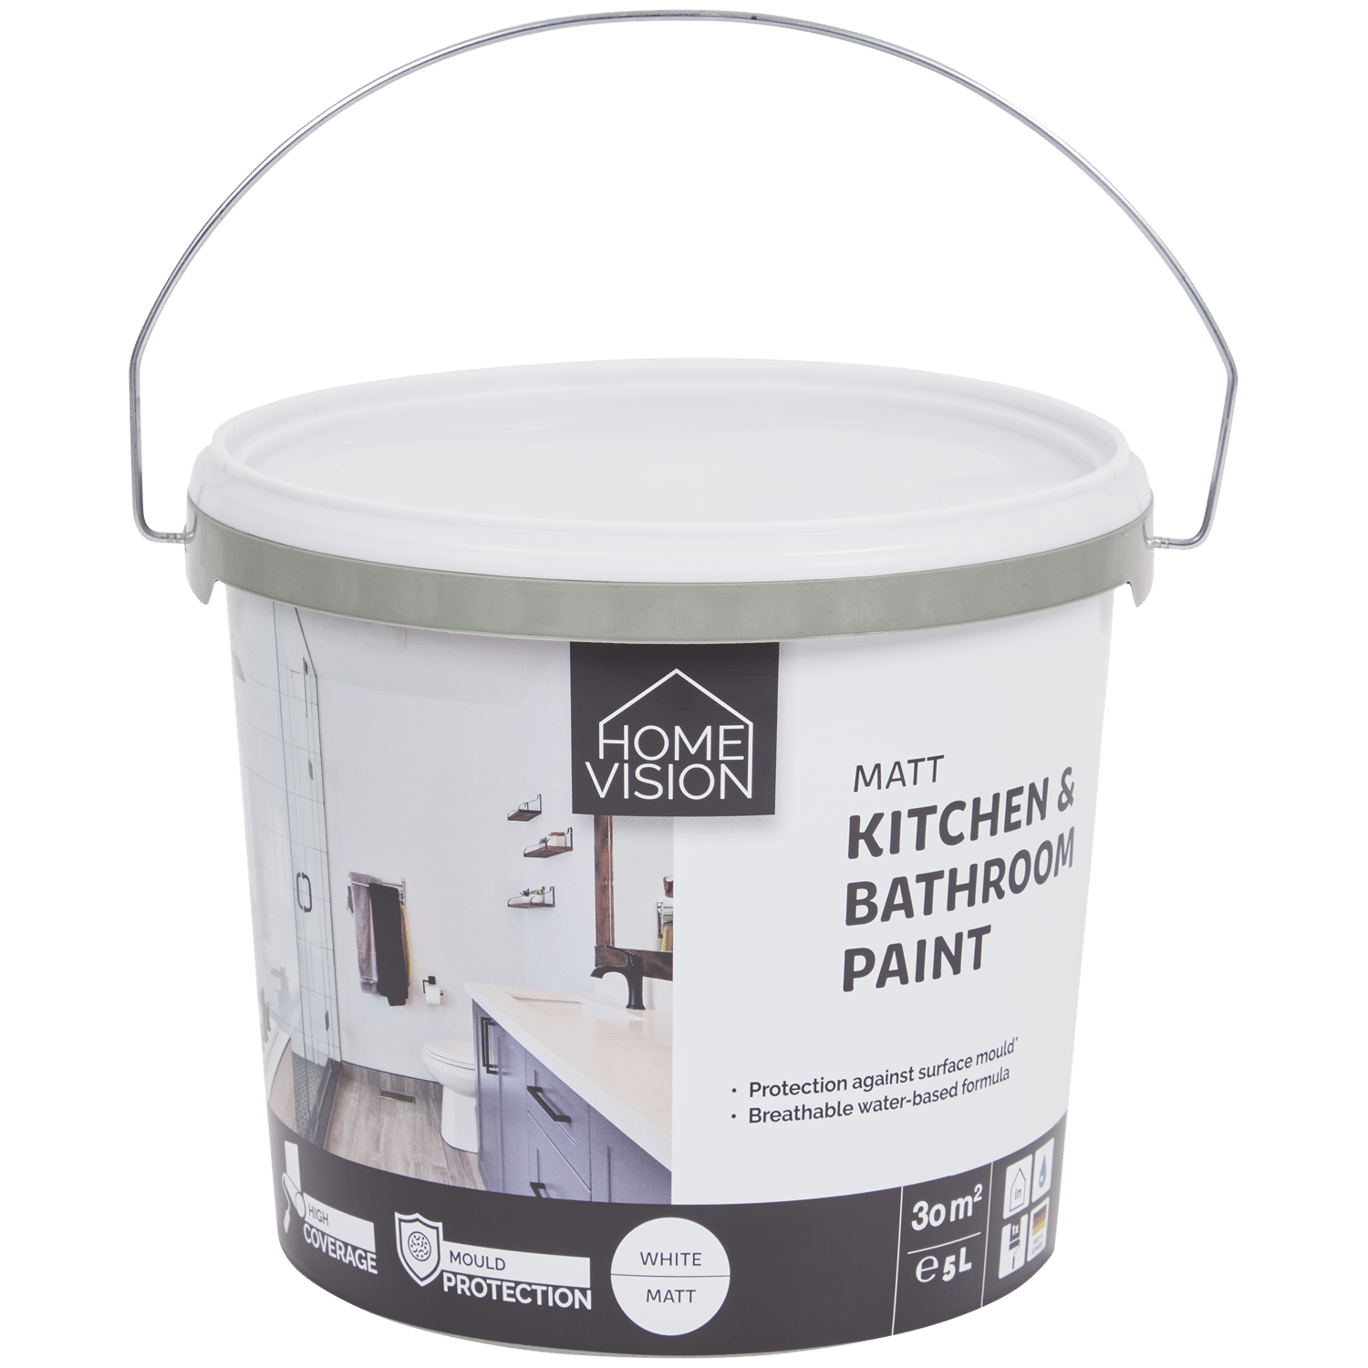 Home Vision badkamer- en keukenverf mat wit